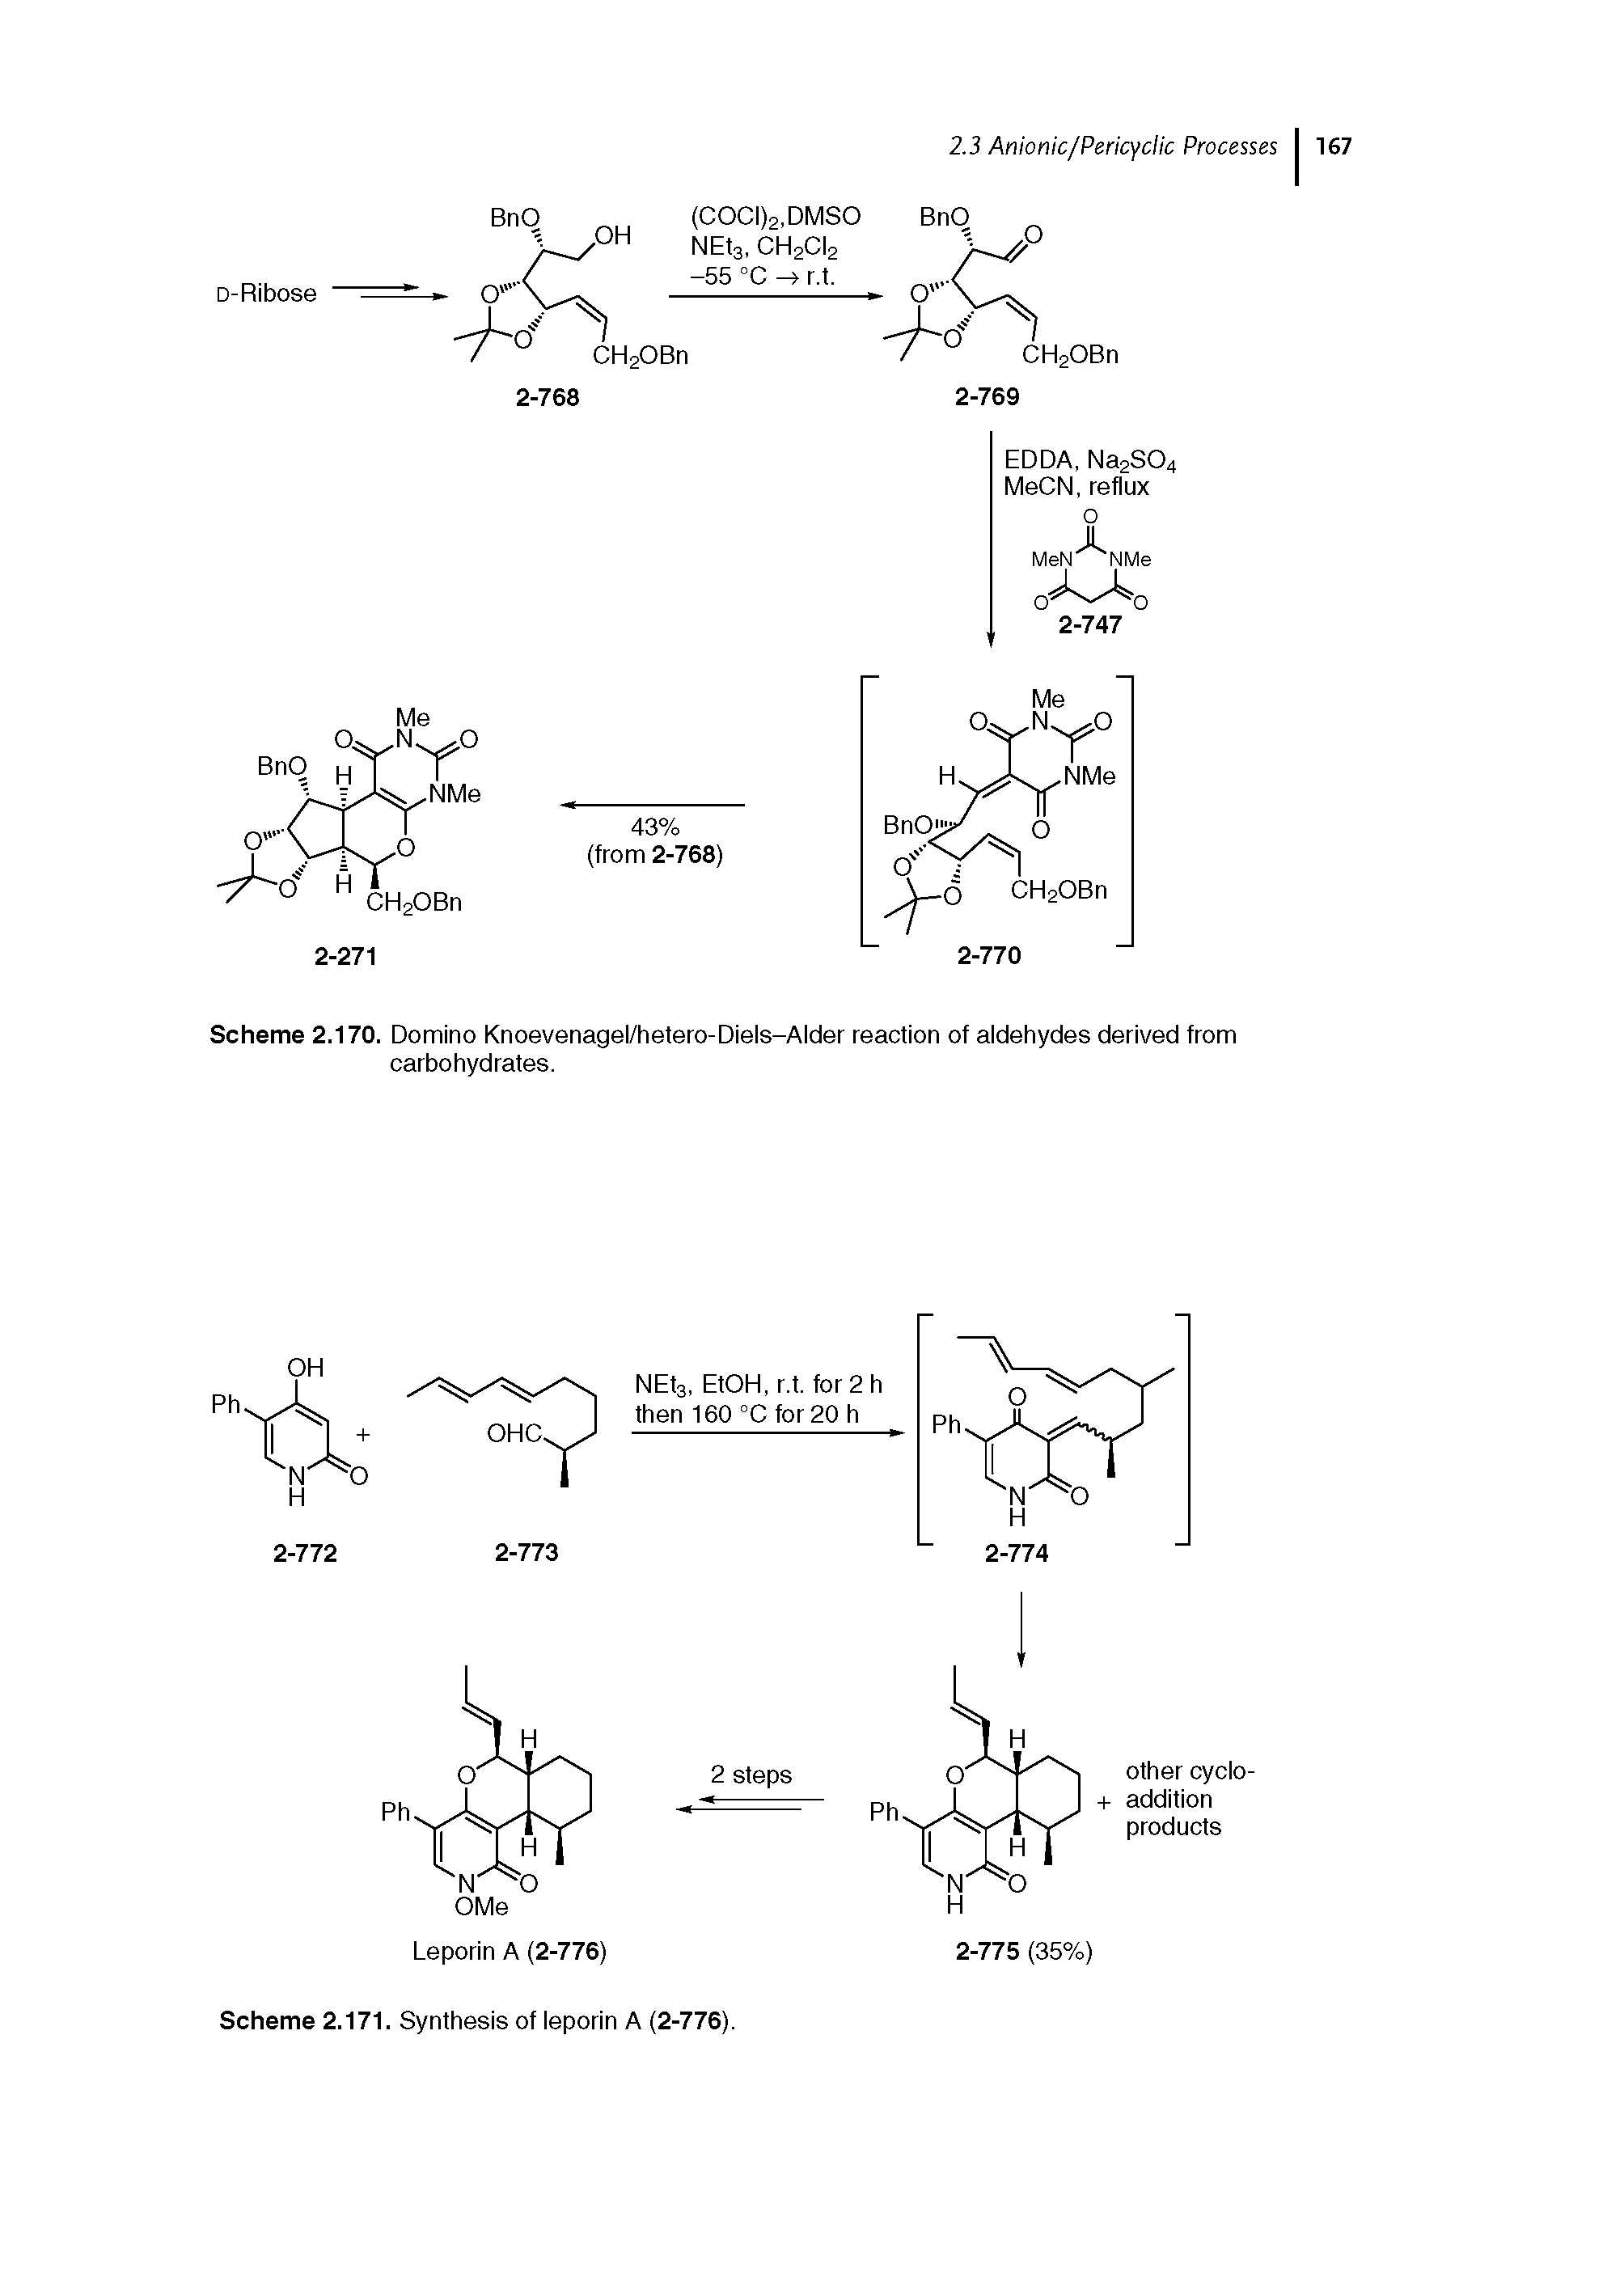 Scheme 2.170. Domino Knoevenagel/hetero-Diels-Alder reaction of aldehydes derived from carbohydrates.